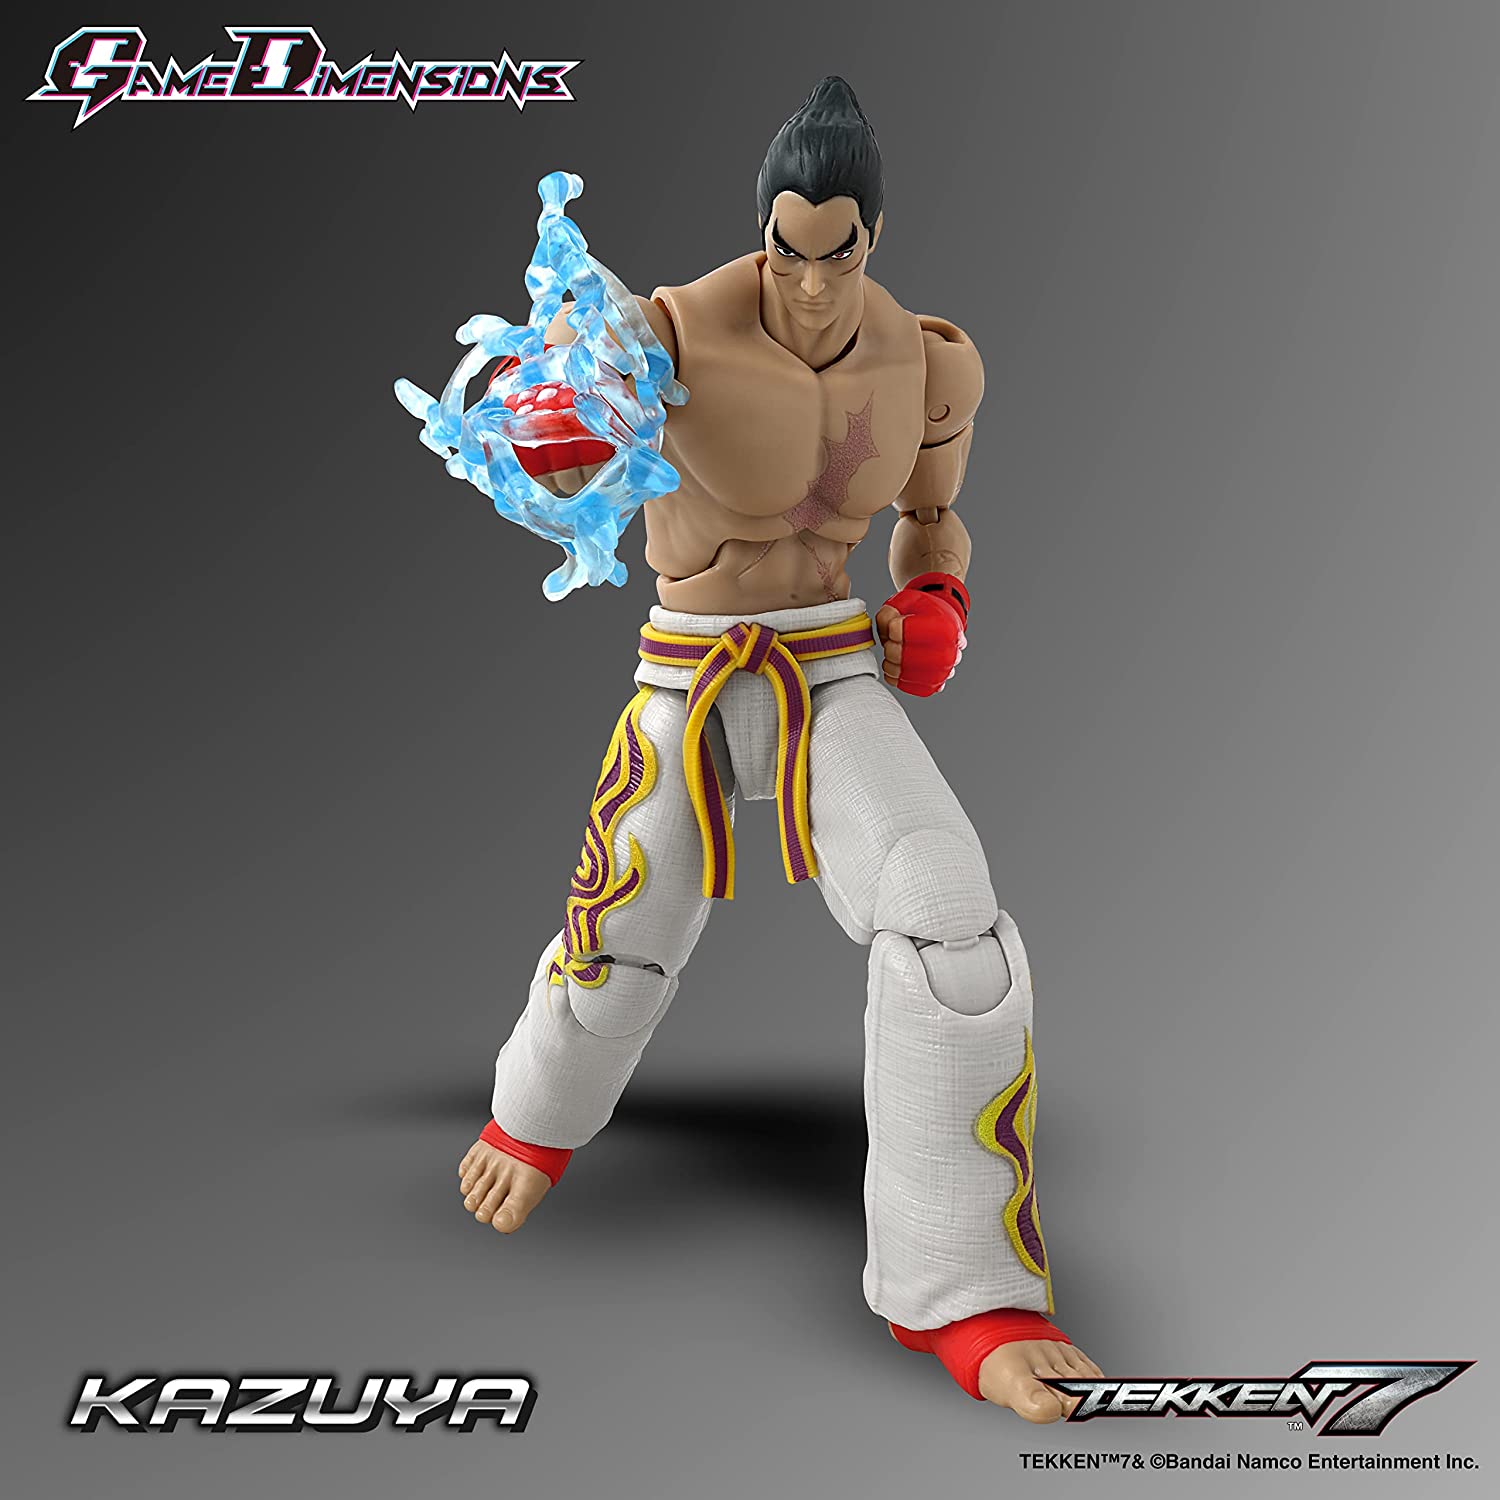 Tekken Kazuya Mishima GameDimensions Action Figure